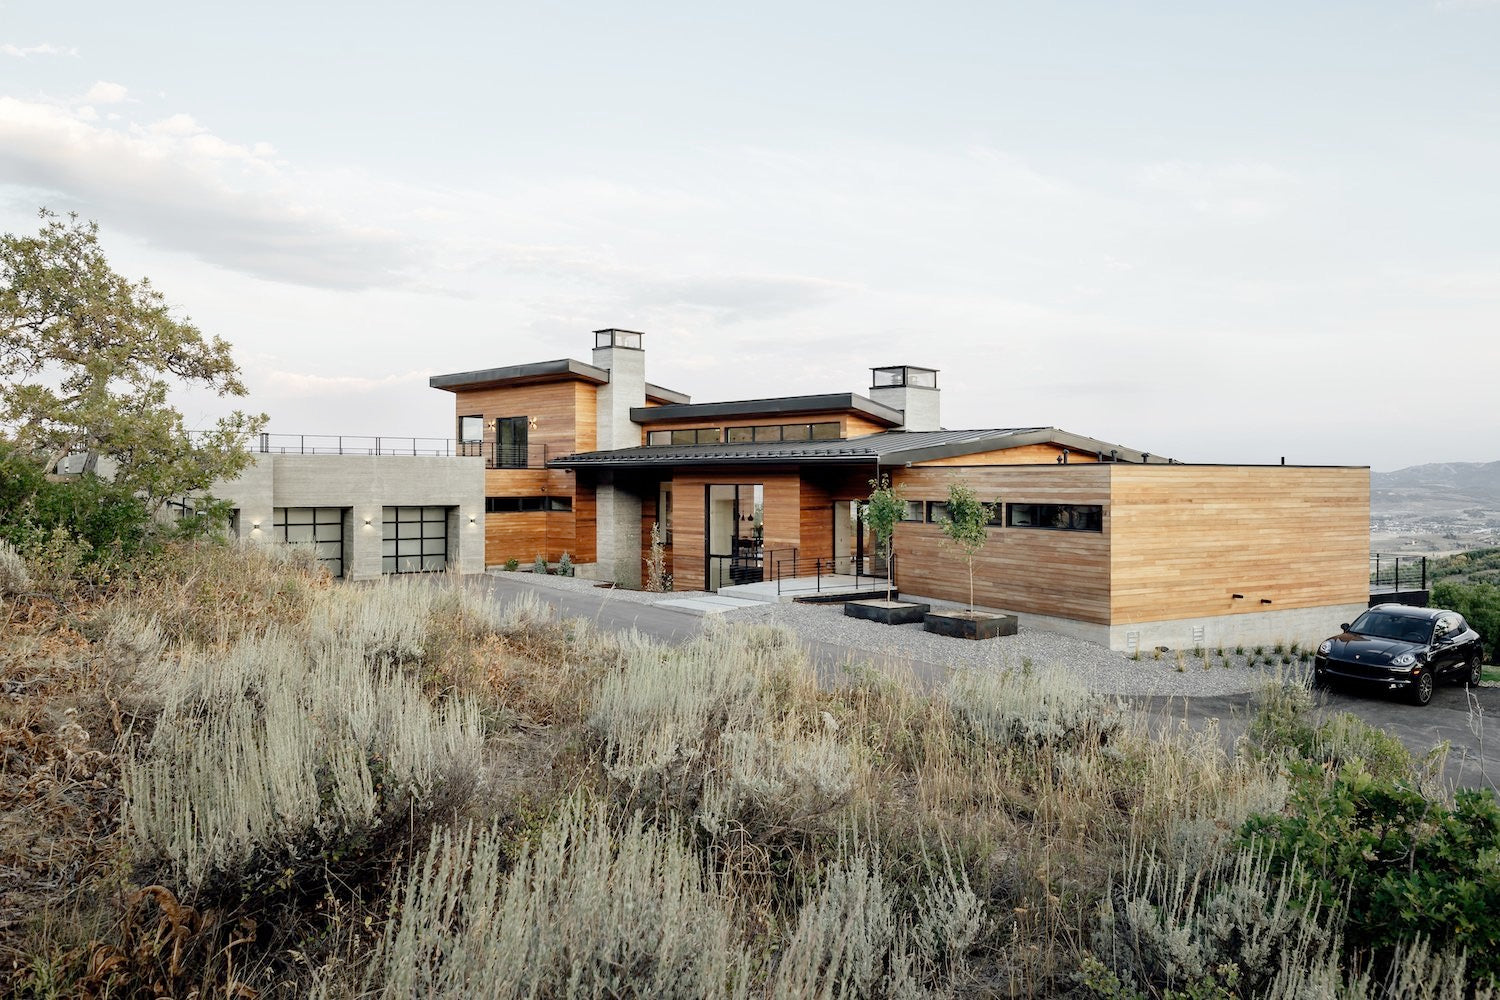 A Rustic Scandinavian Modern Home in Utah - The Nordroom